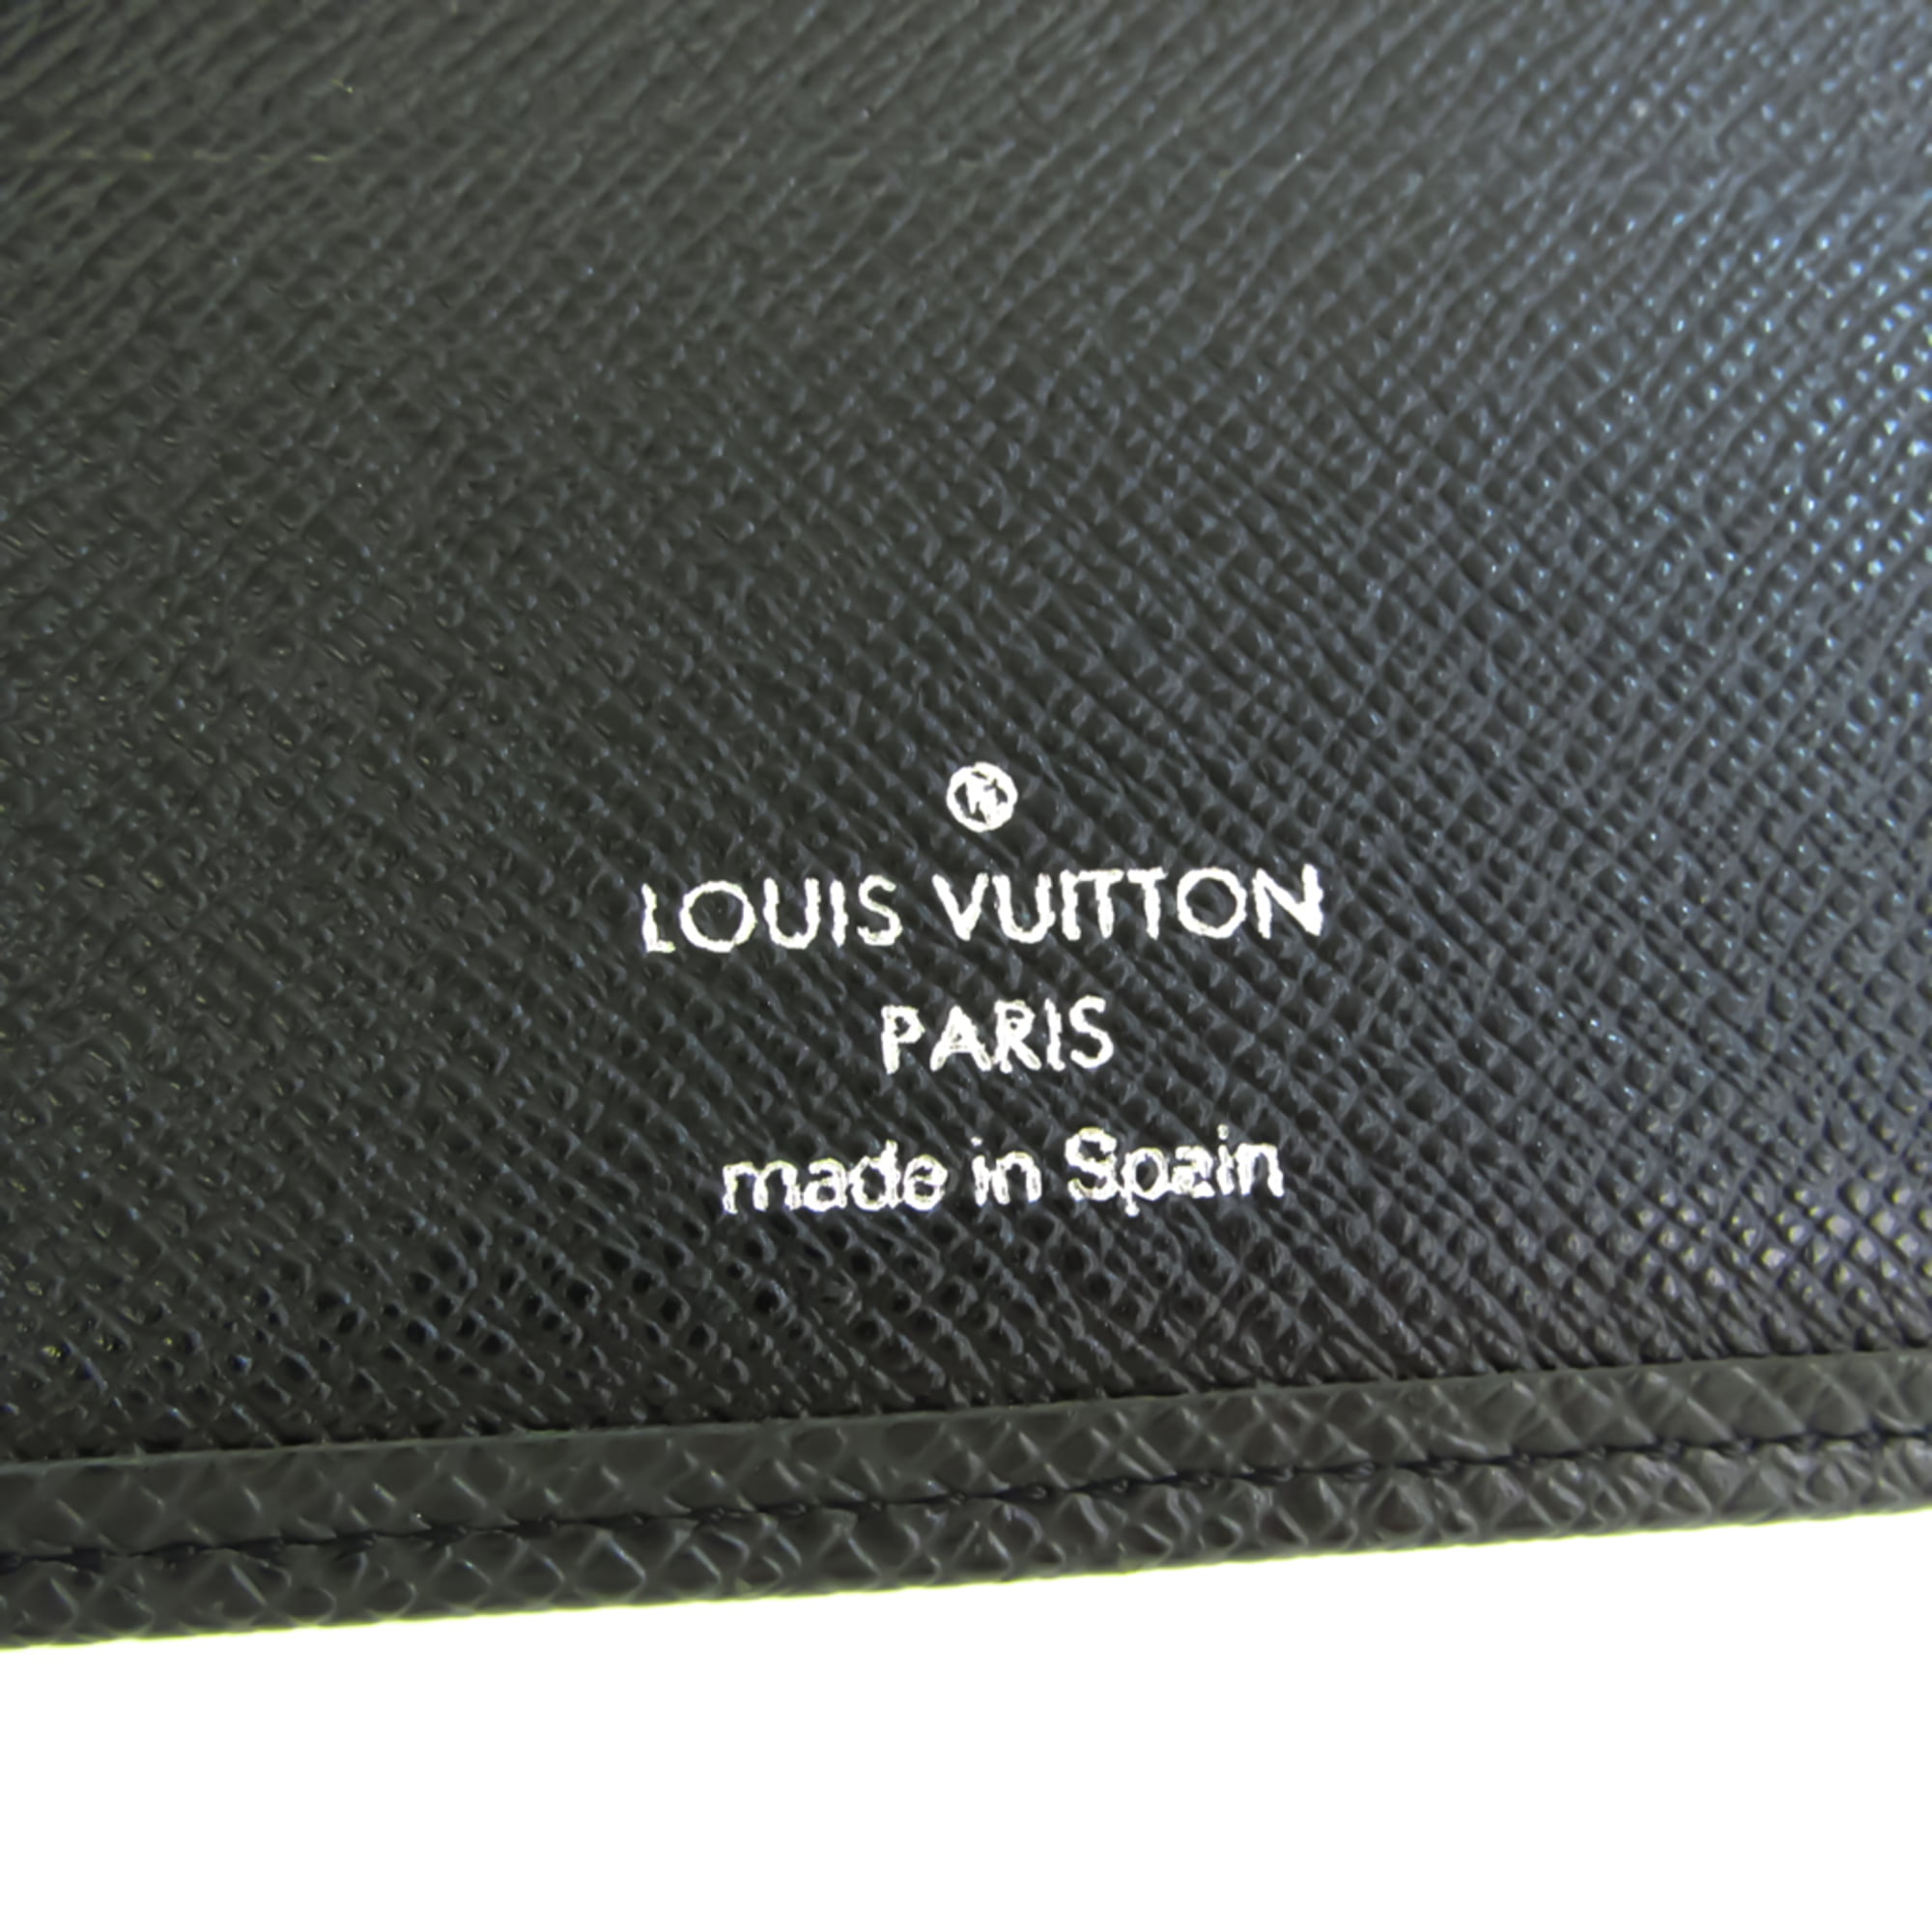 Lv man wallet M30952 Taiga- sold 